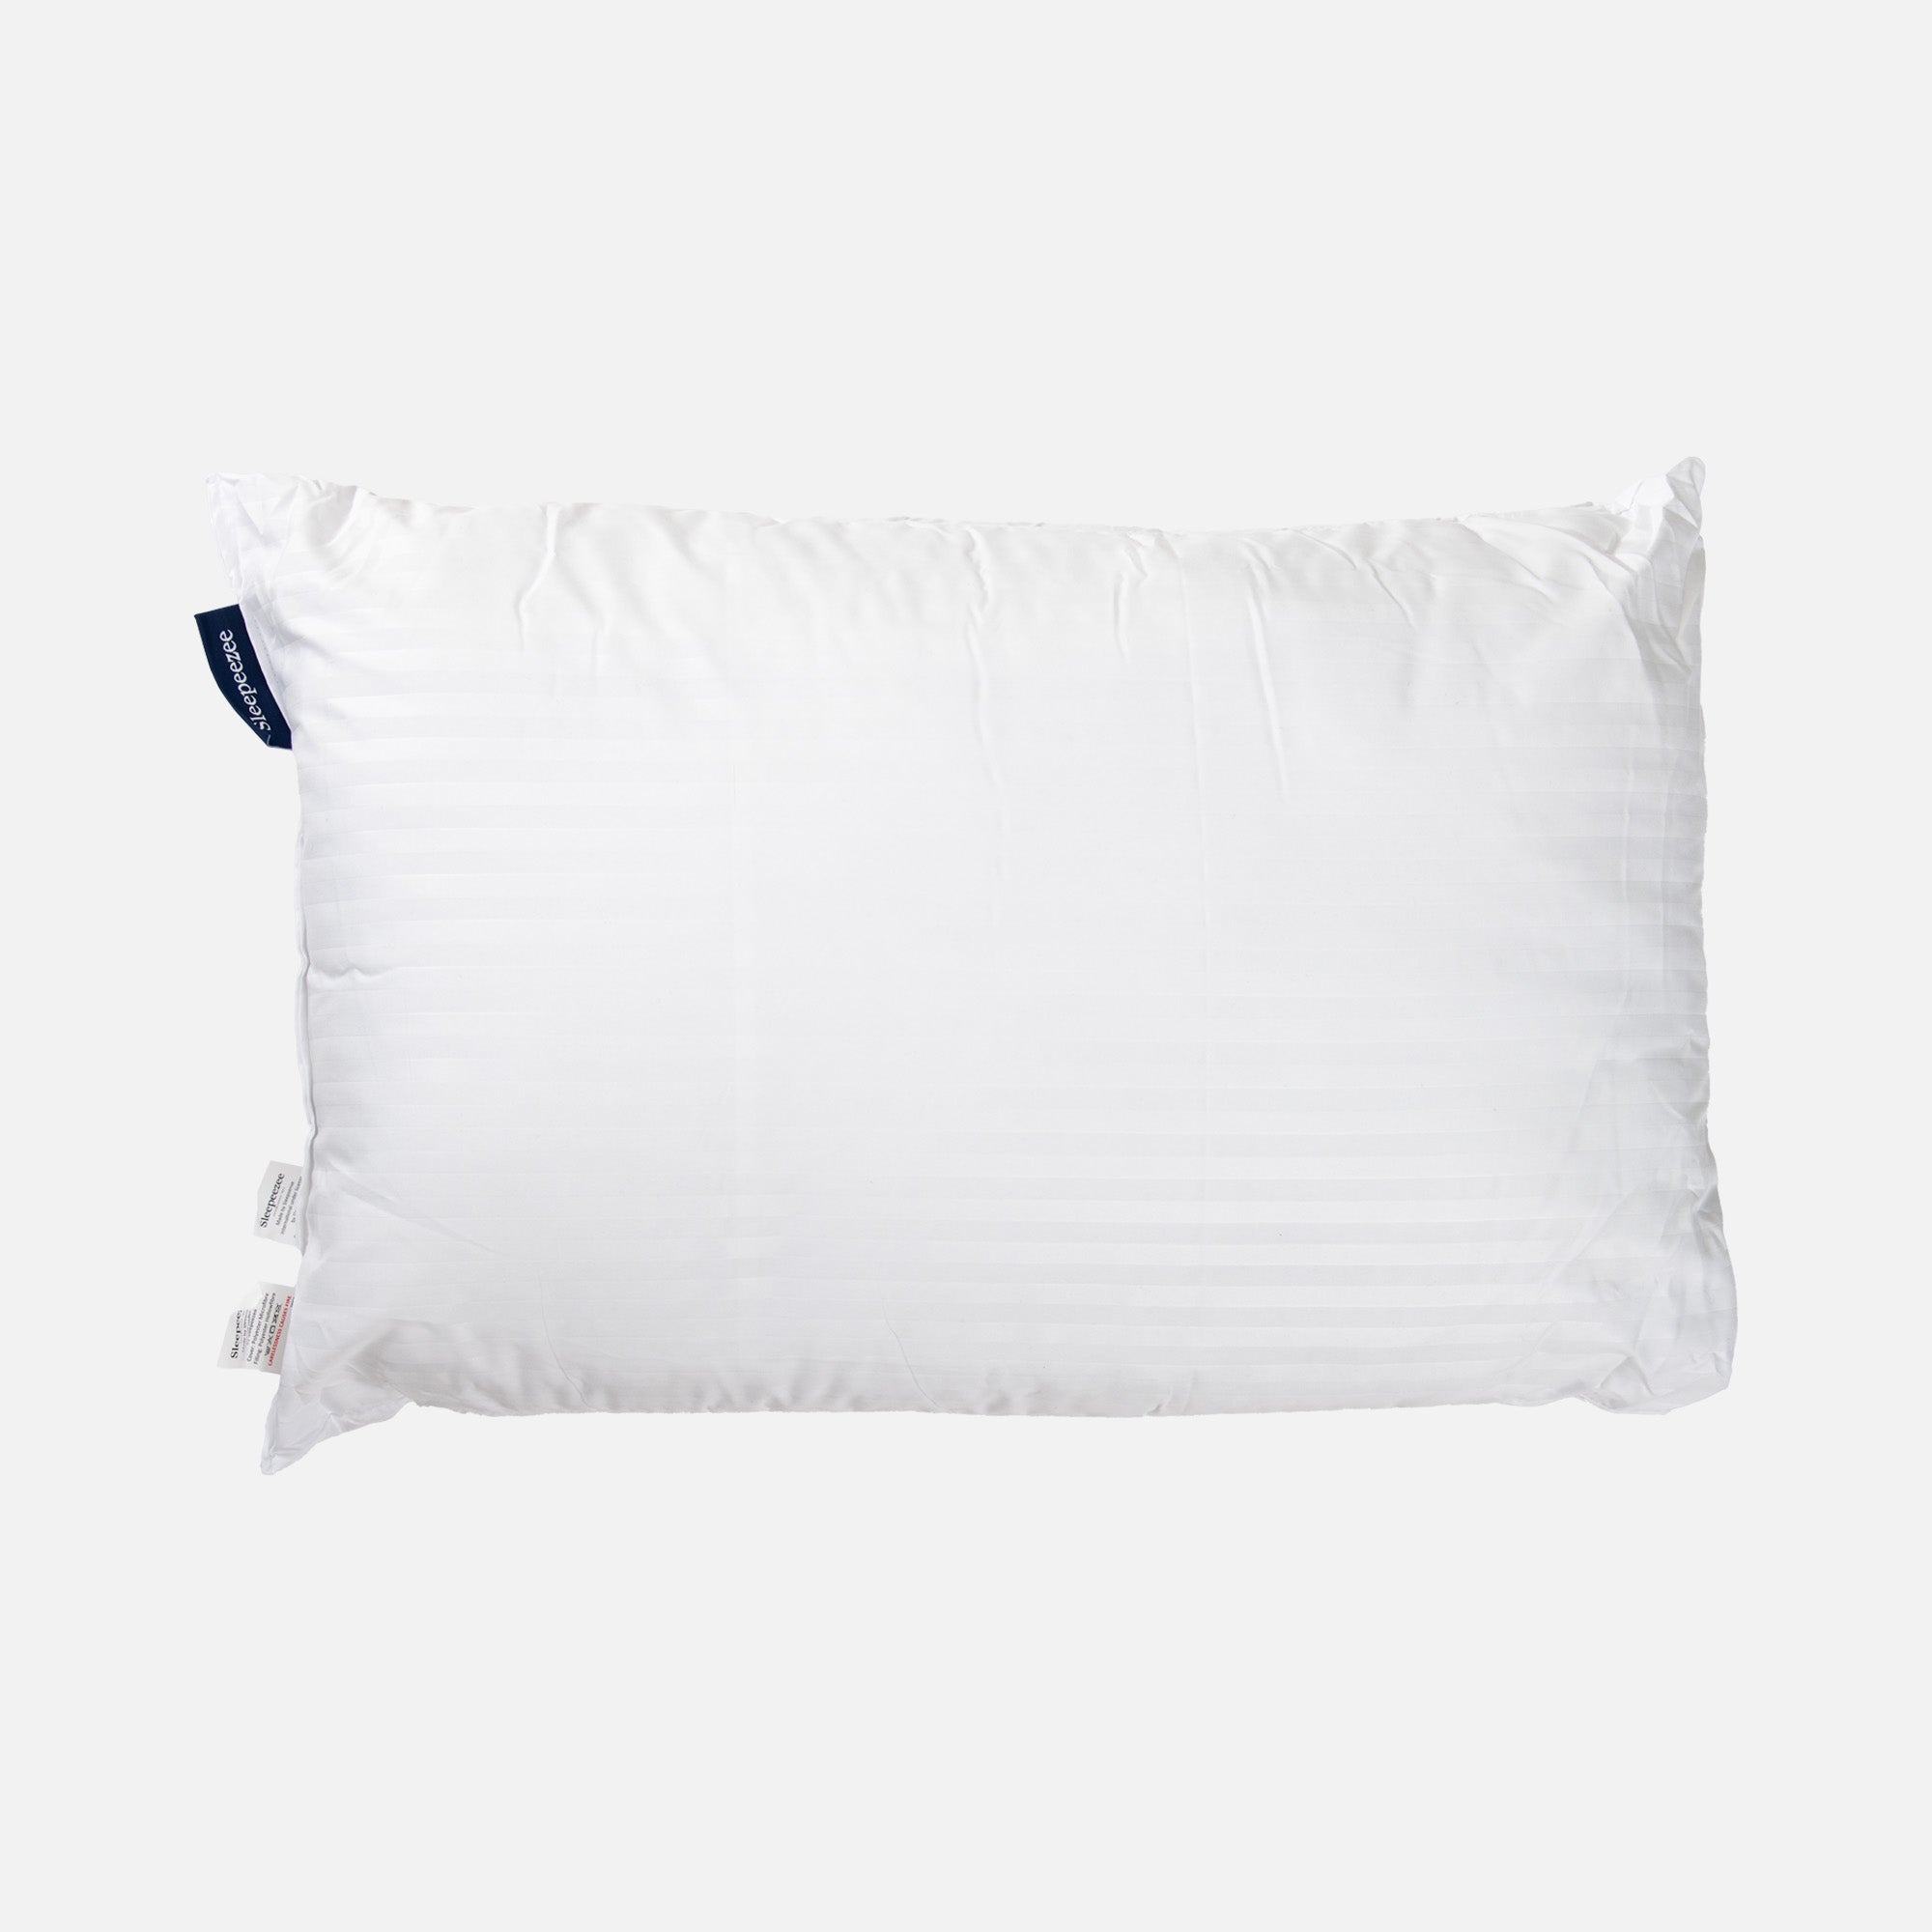 Pillows - Sleepeezee Perfect Pillow Pair